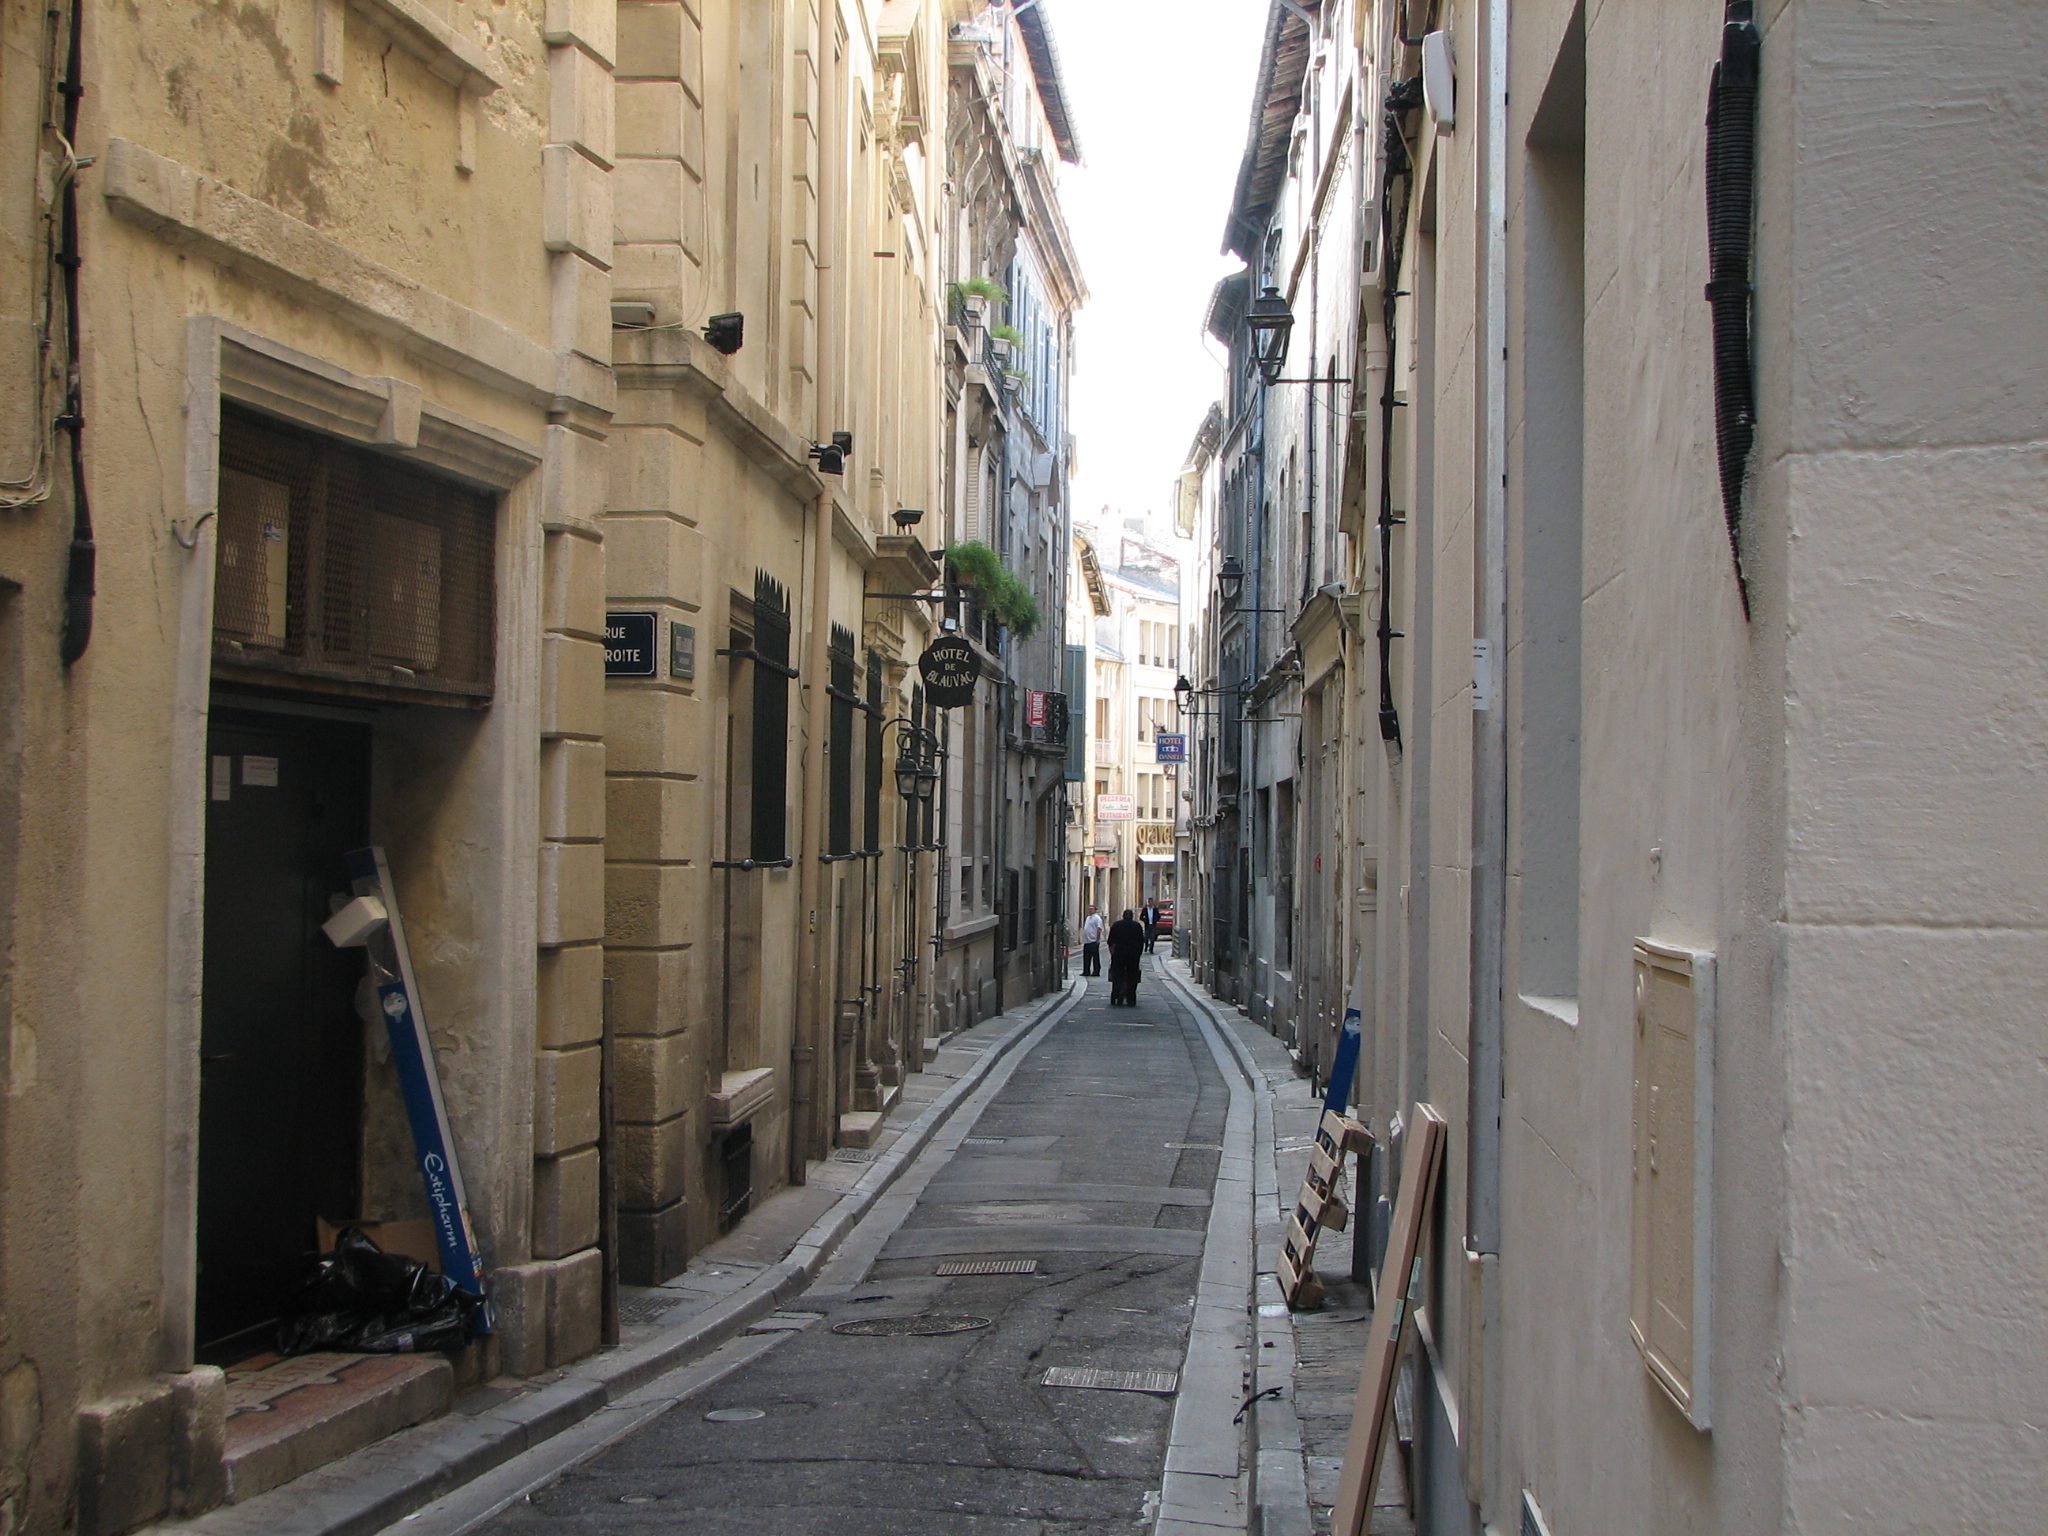 Typical Avignon street